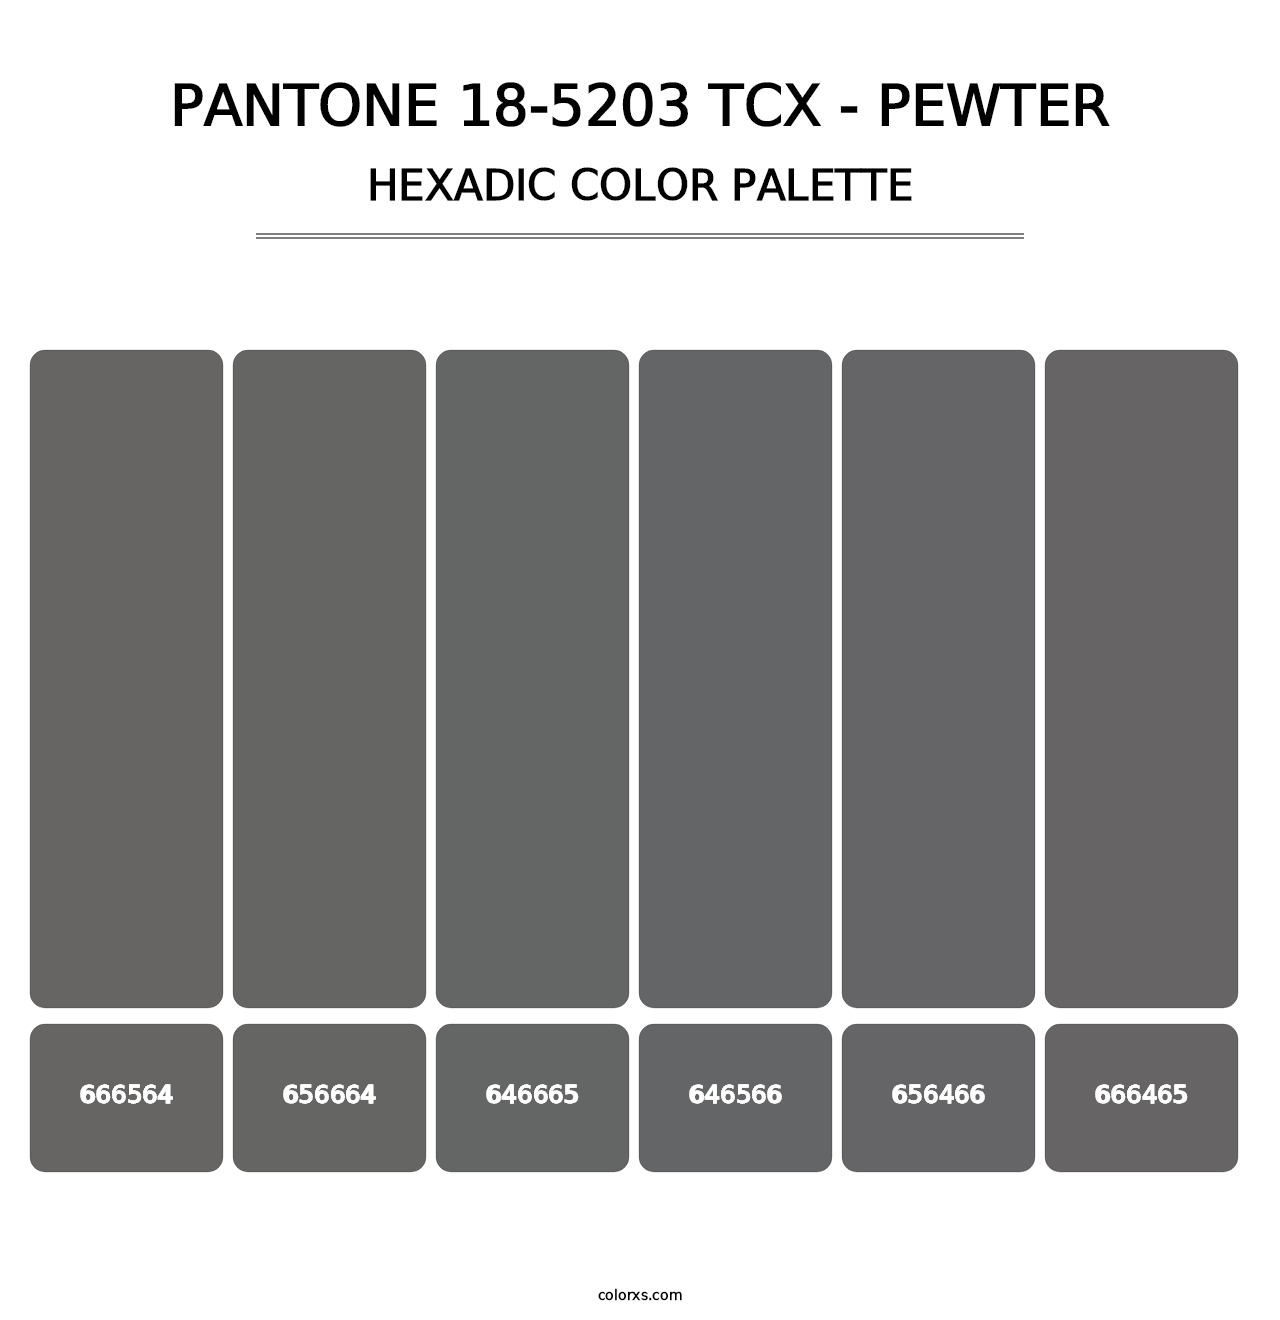 PANTONE 18-5203 TCX - Pewter - Hexadic Color Palette